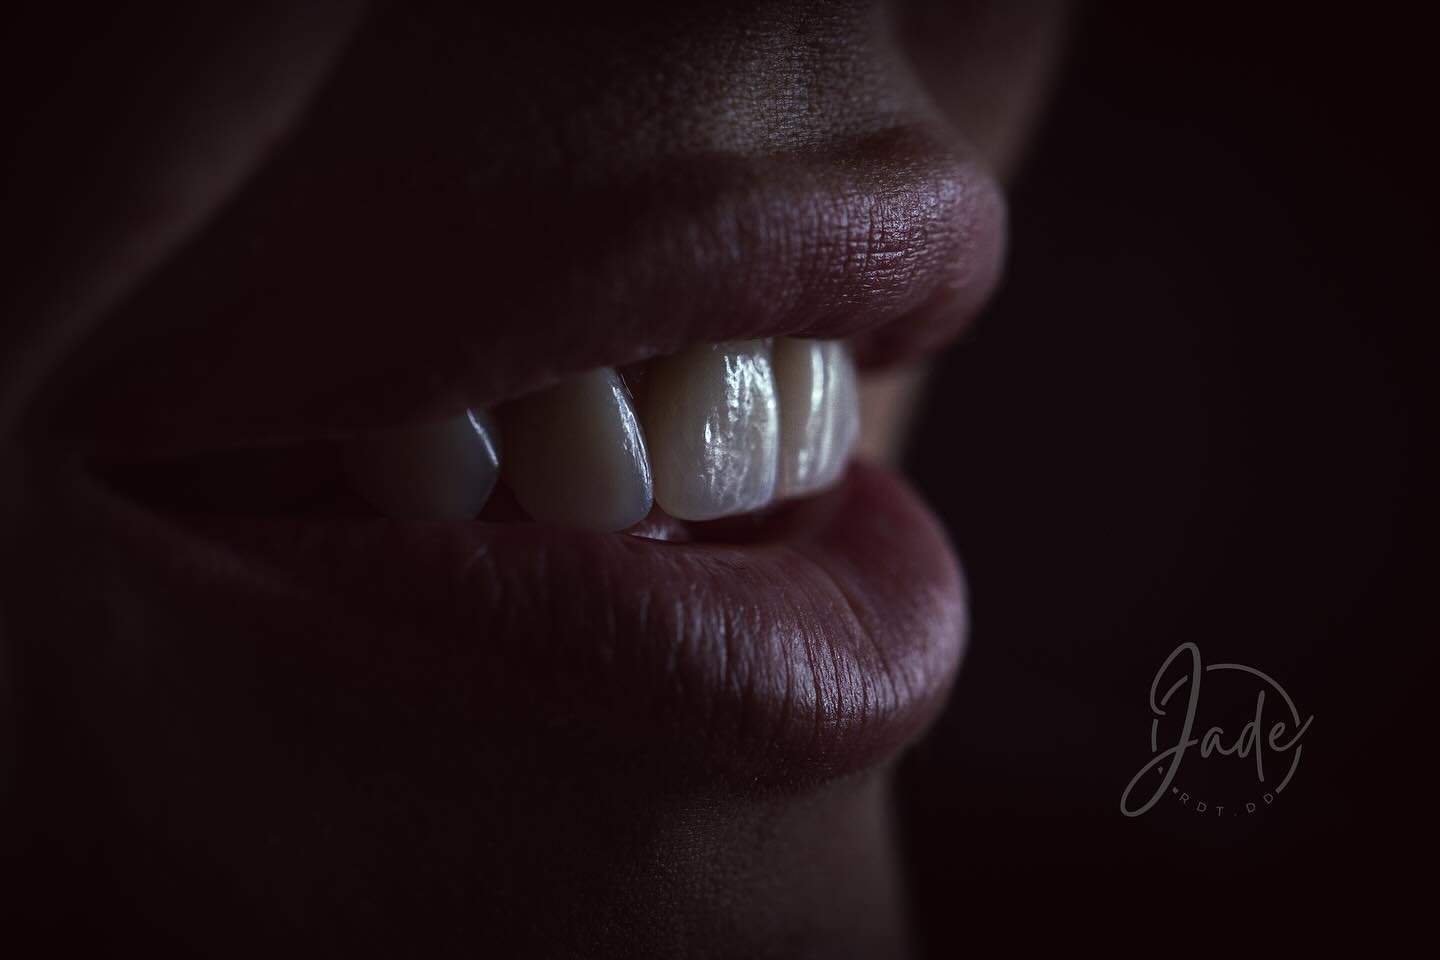 Resiliency and beauty interwoven into enamel.🌟
.
.
.
Teeth: @candulor 
Photo &amp; maker: @jade.rdtdd 💗
.
.
.
#waxtryin #tryin #dentures #denture #implantdentist #denturistlife #dentureimplants #denturegang #completedenture #fulldenture #completede